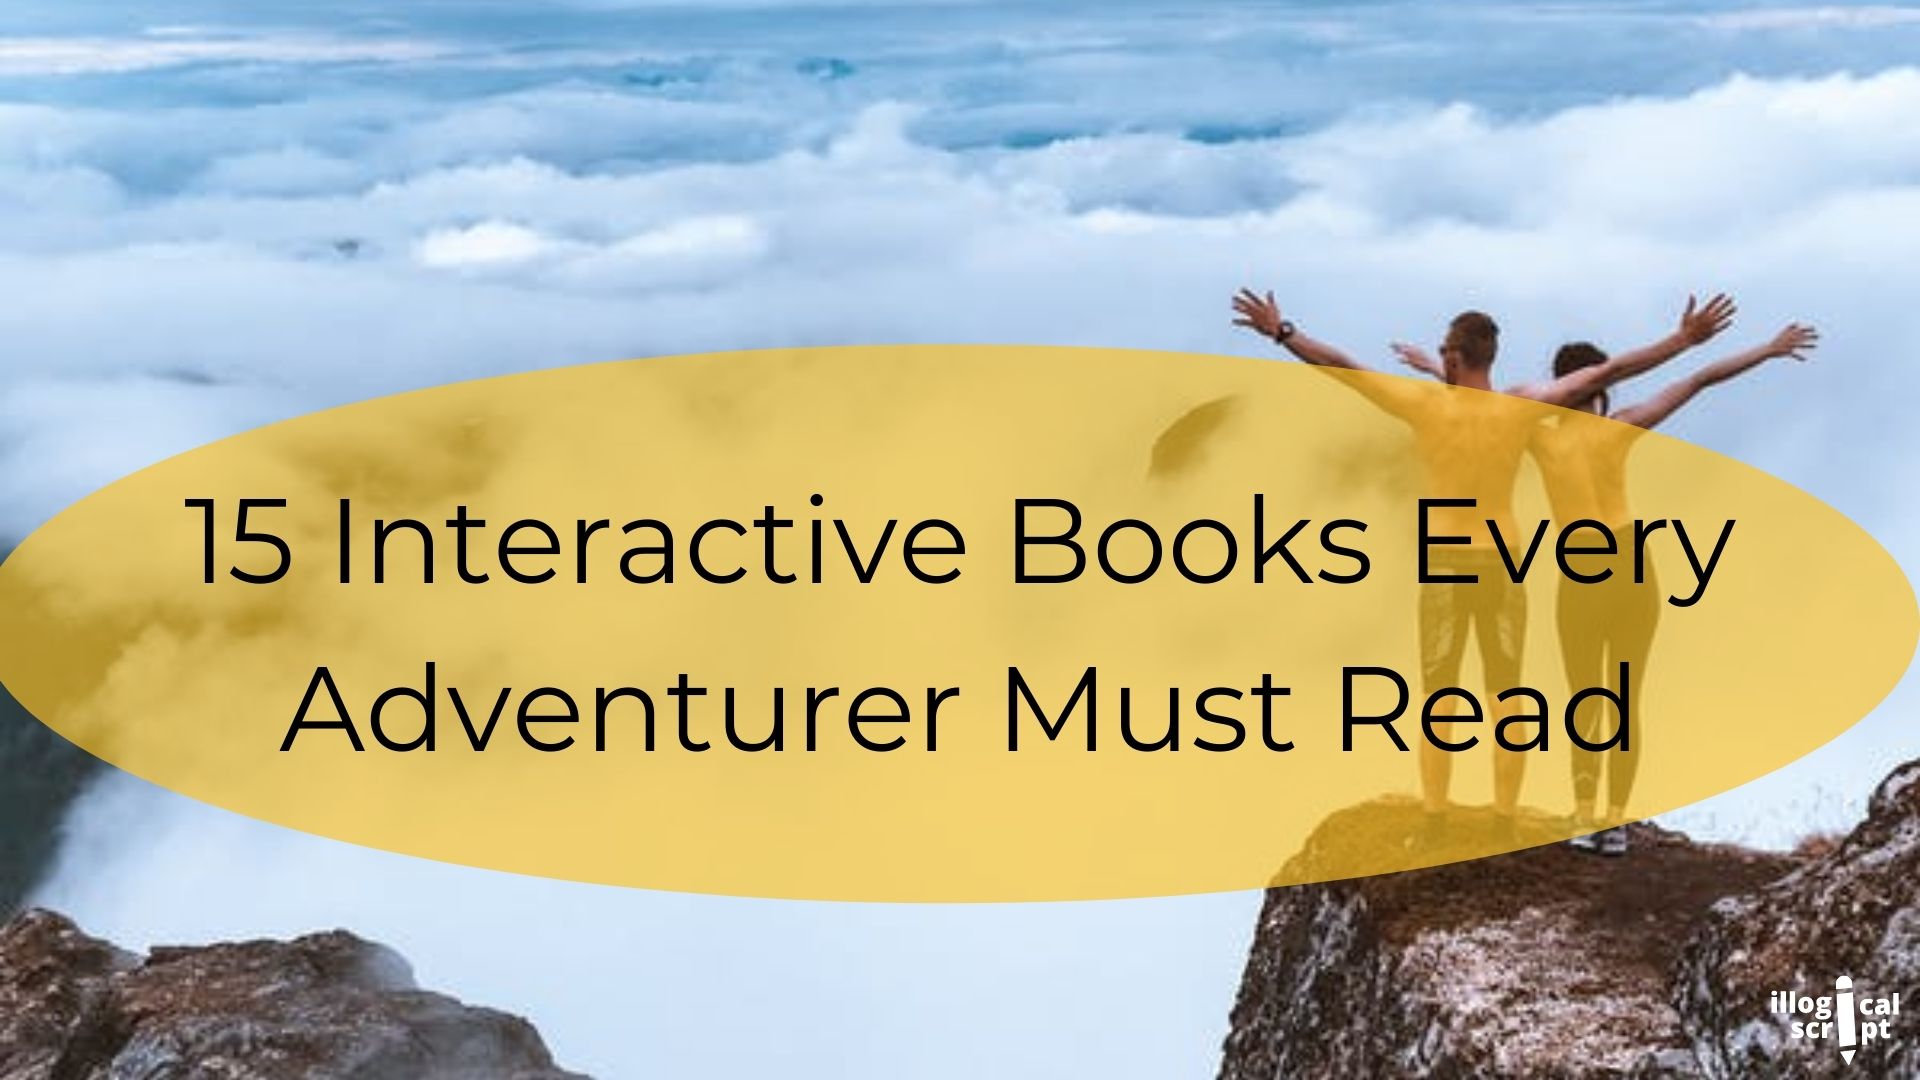 15 Interactive Books Every Adventurer Must Read